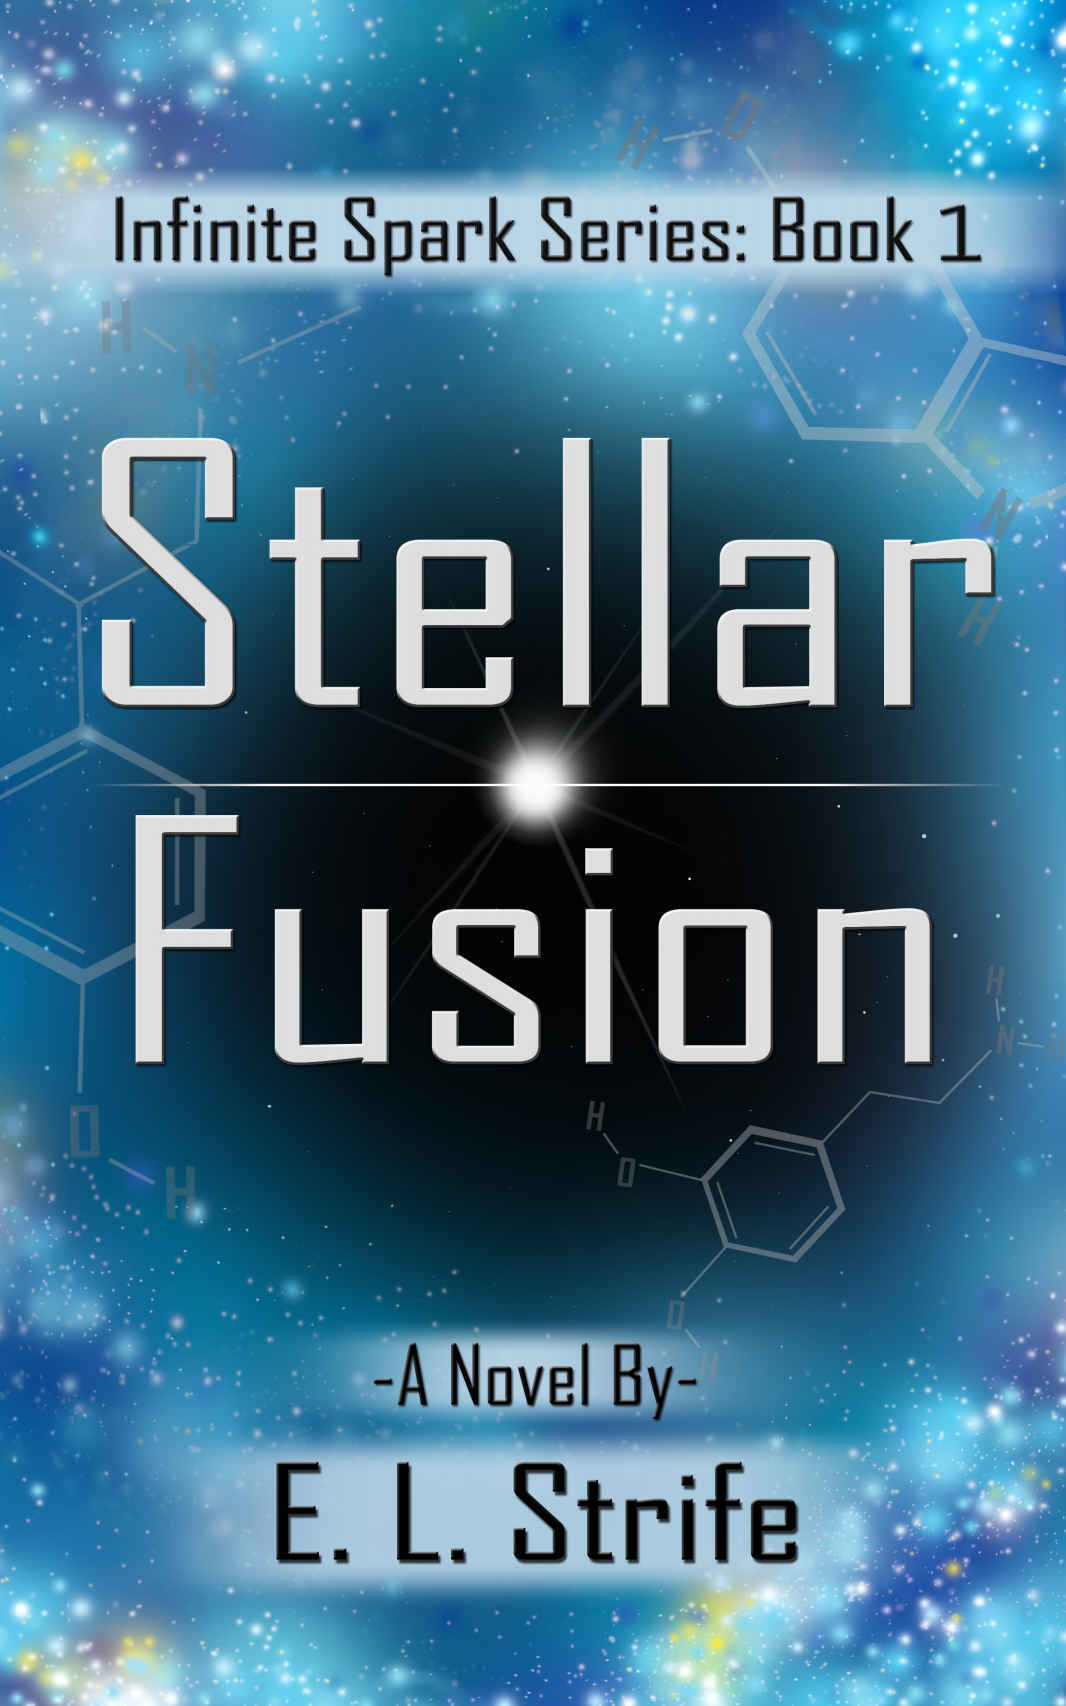 Stellar Fusion